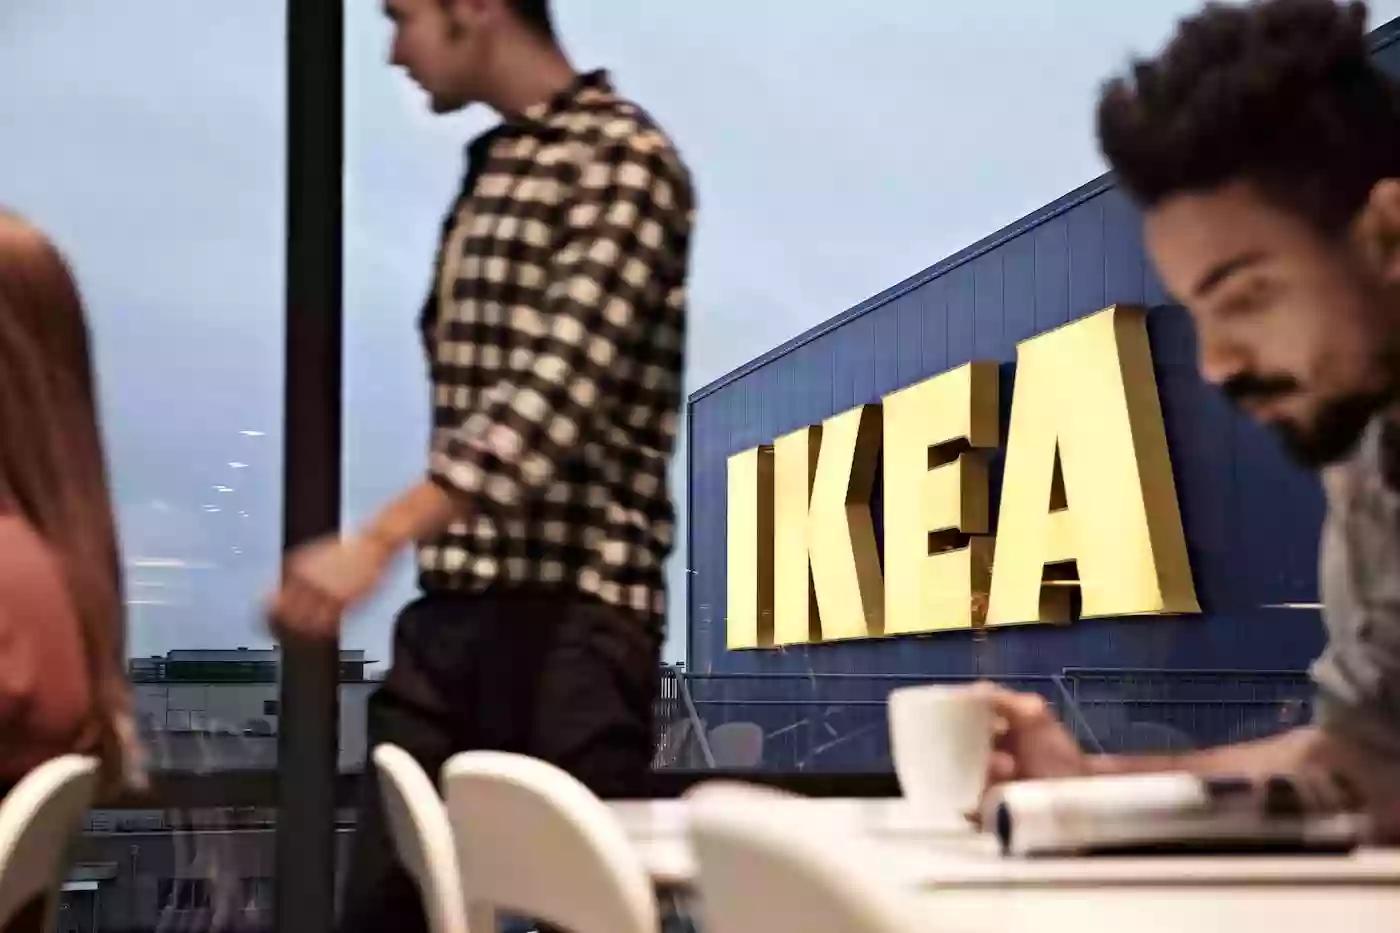 IKEA Barakaldo